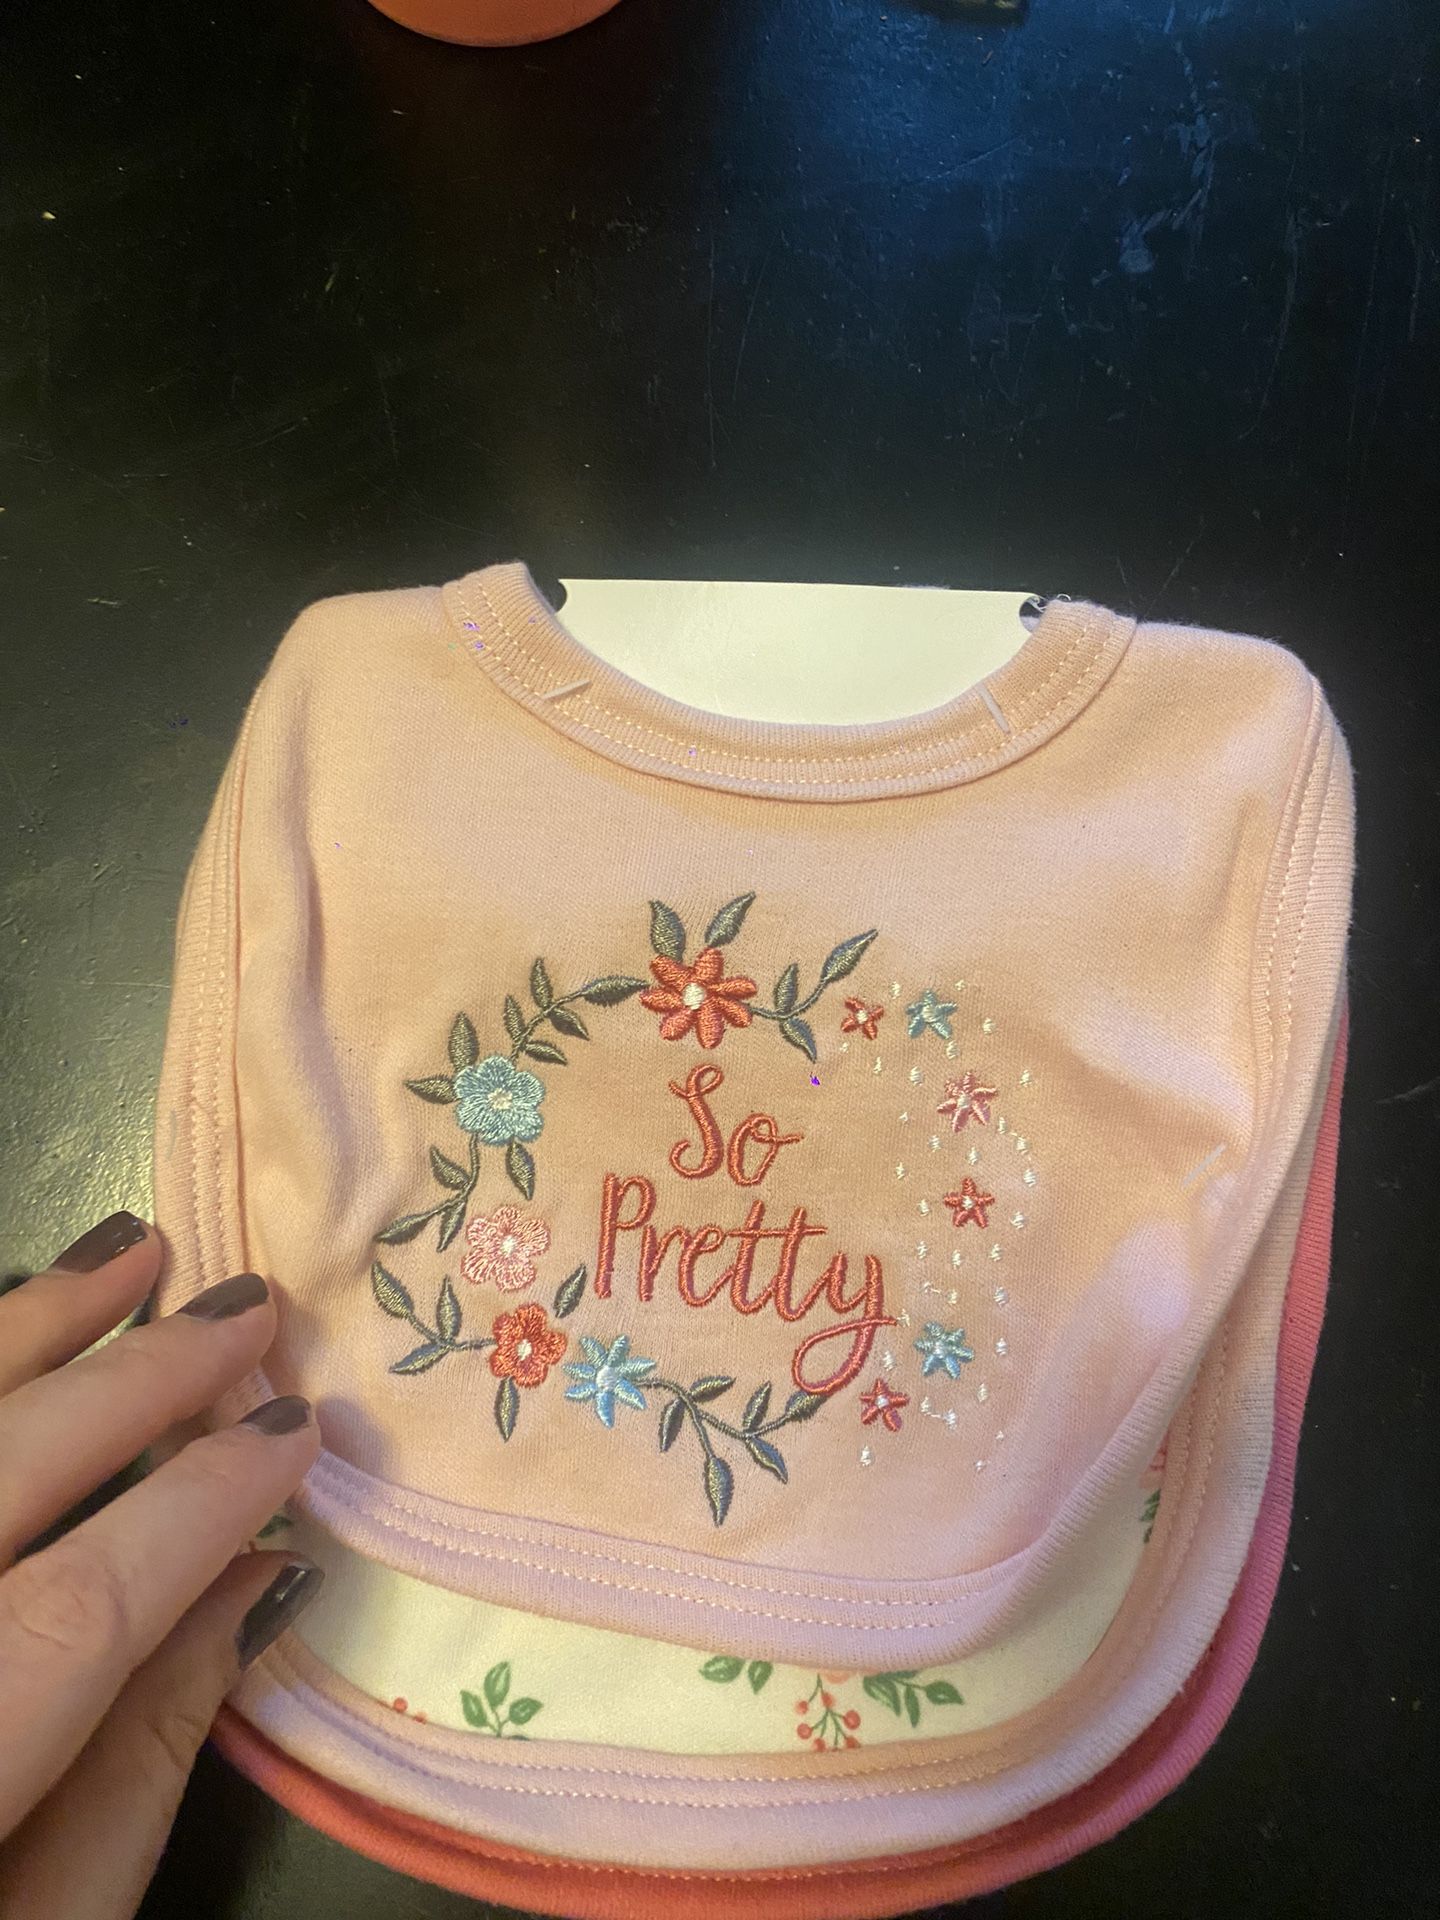 New 3 Set Bibs Infants Girls Pink And Floral 